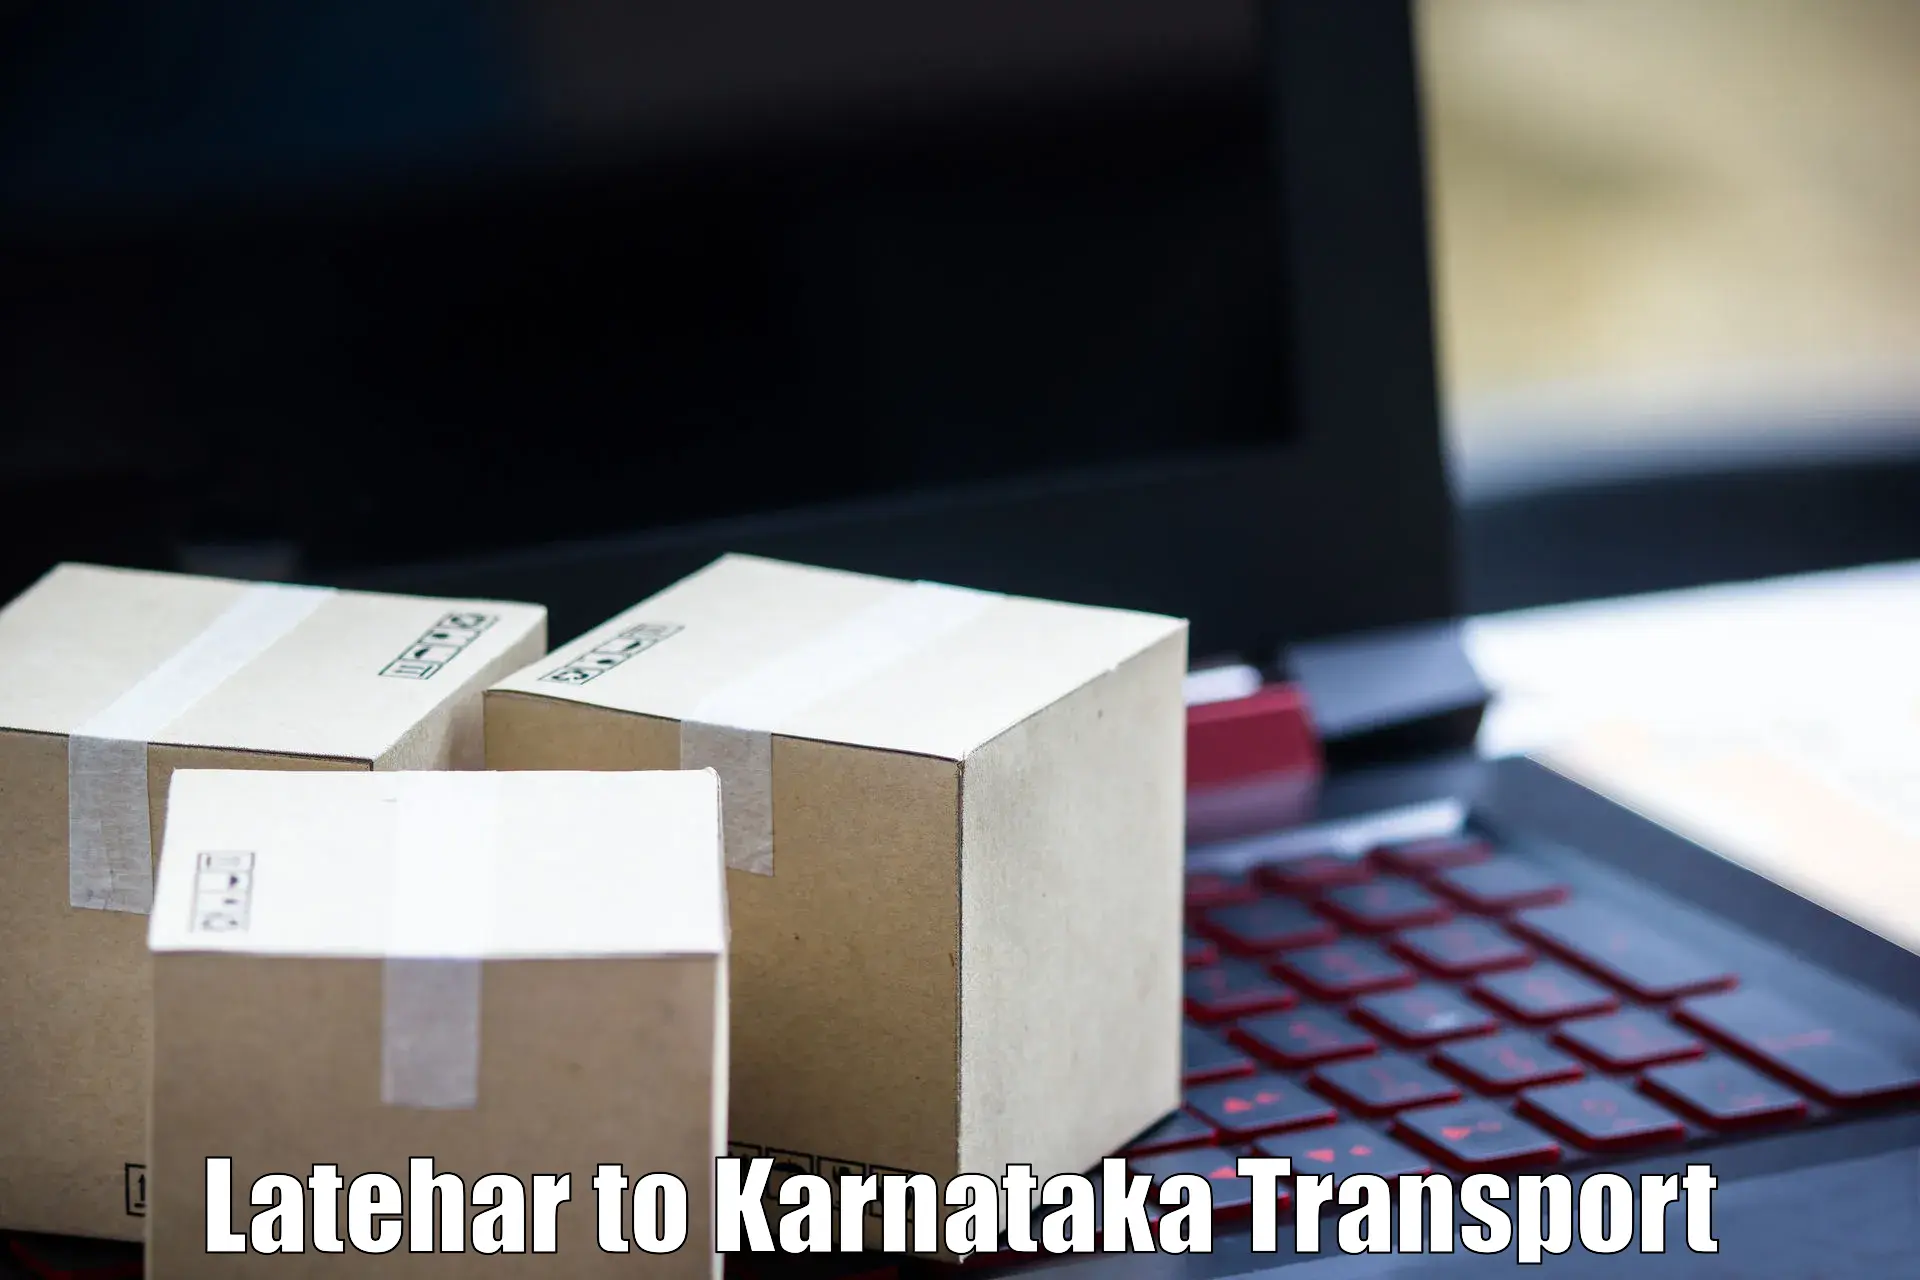 Online transport service Latehar to Bhatkal